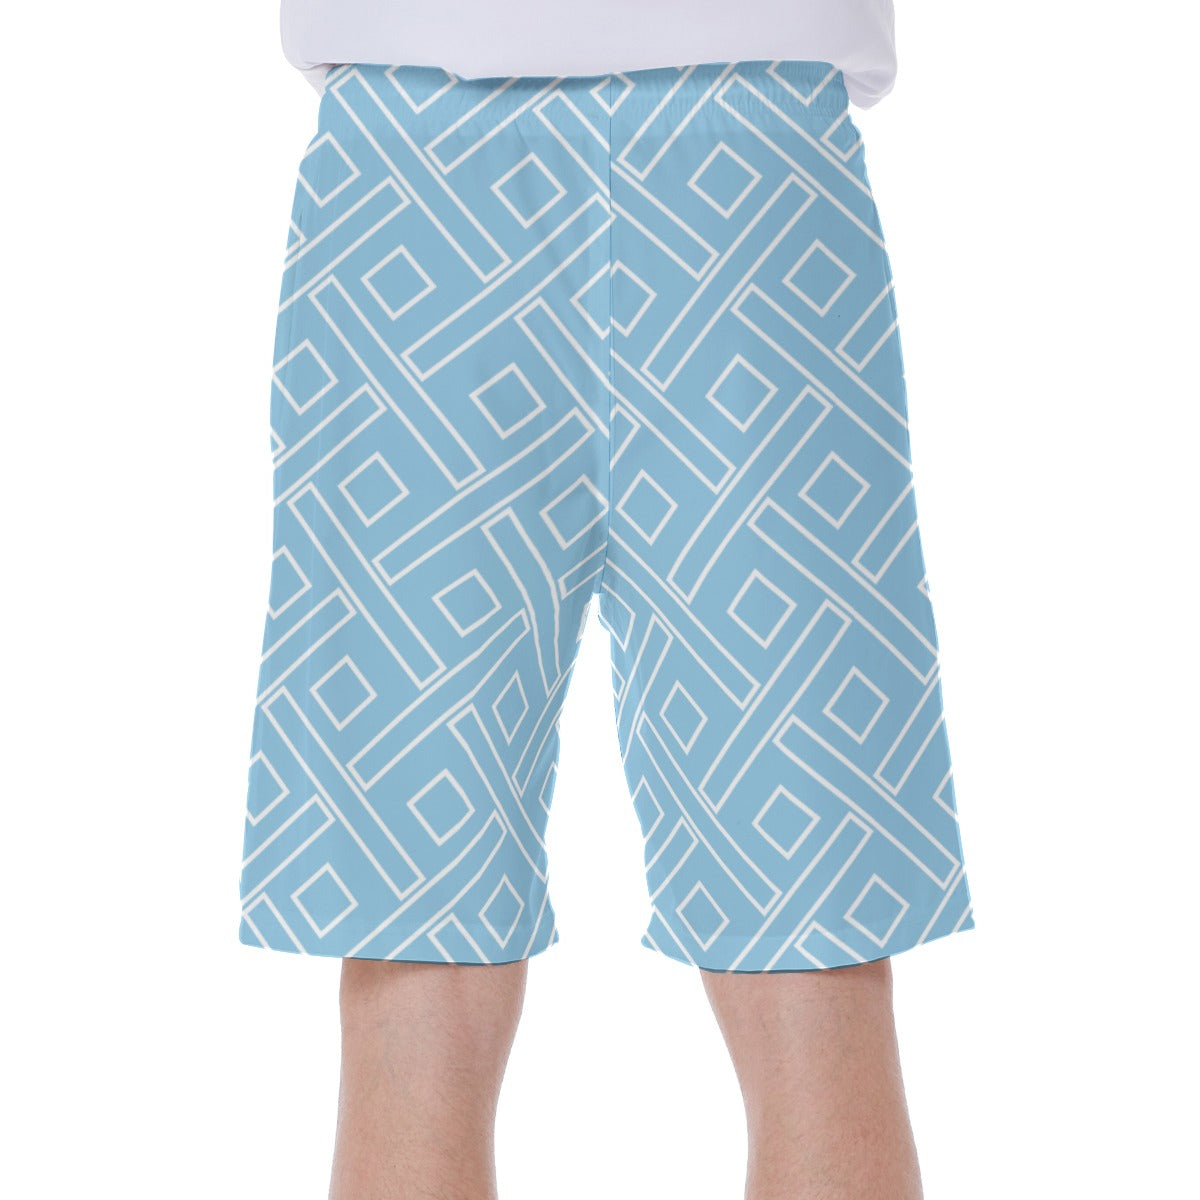 All-Over Print Men's Beach Shorts